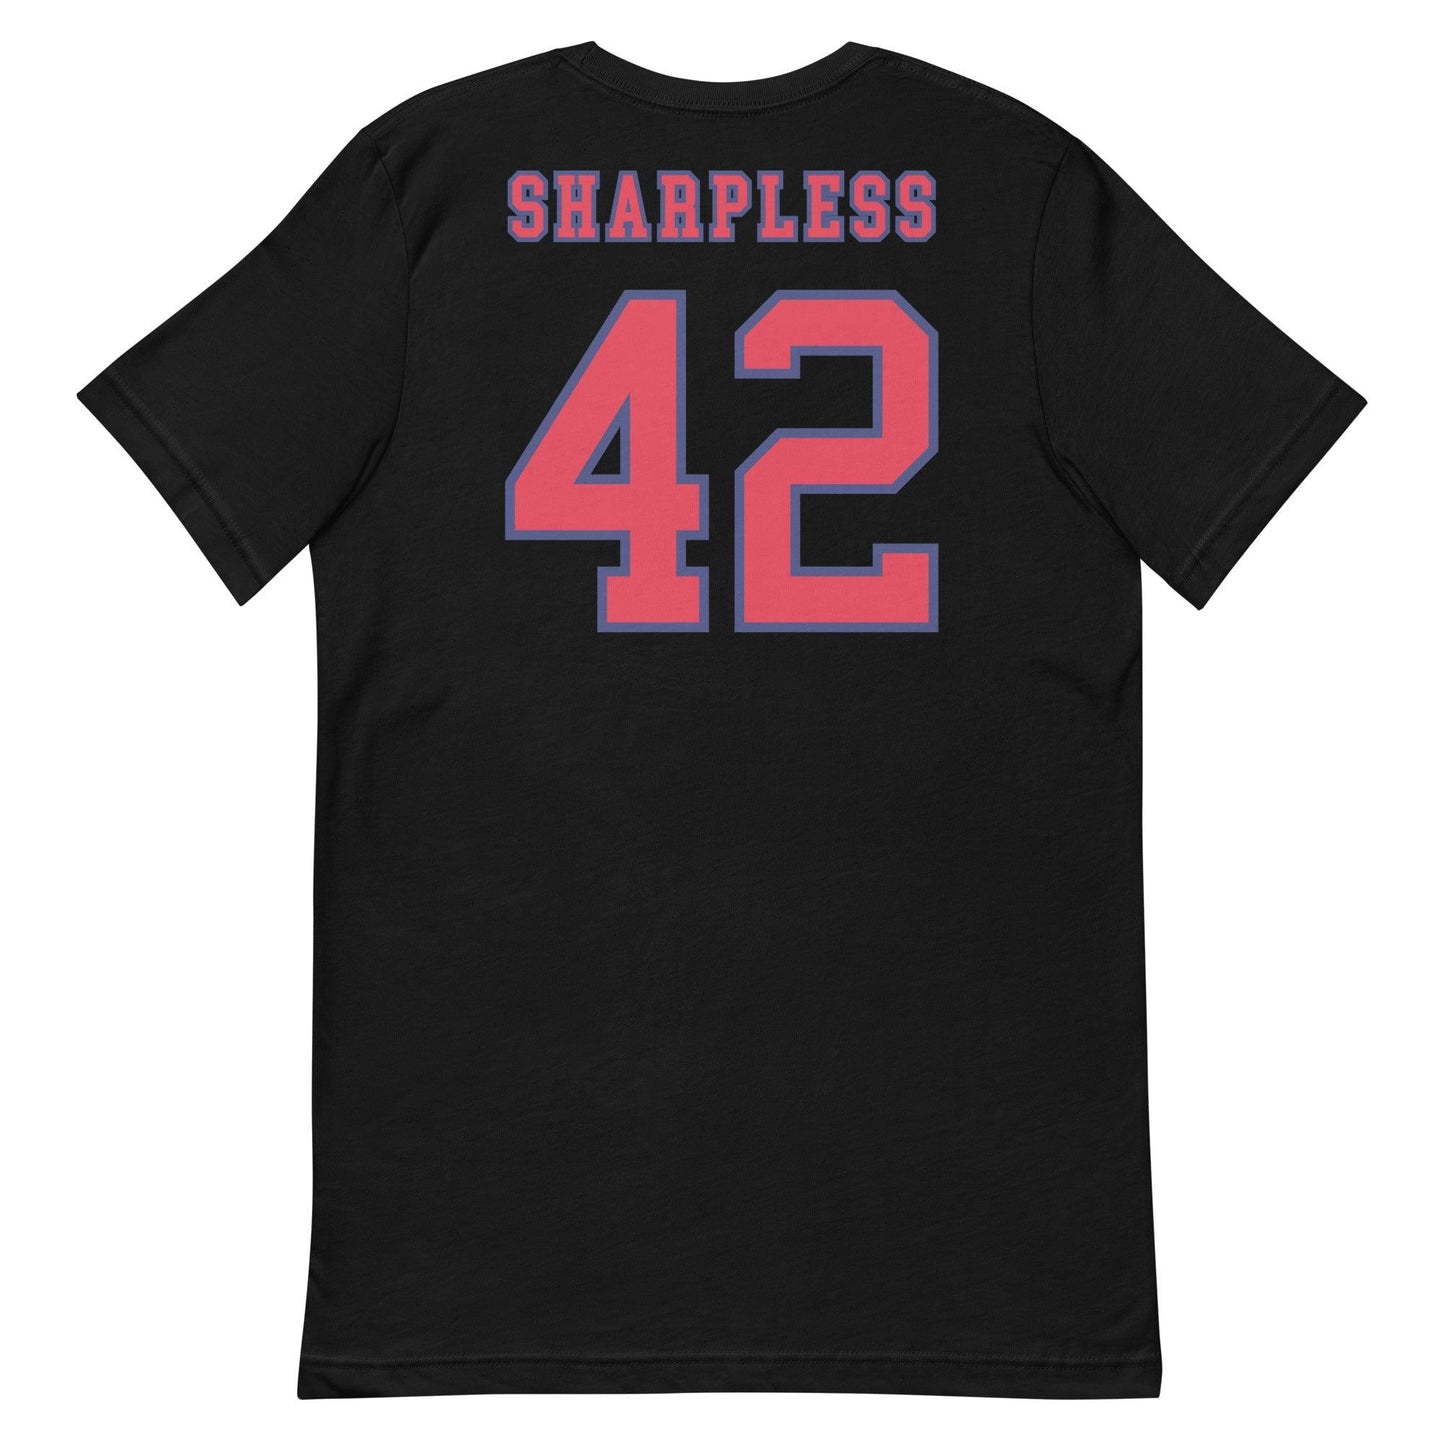 Angelo Sharpless "Jersey" t-shirt - Fan Arch